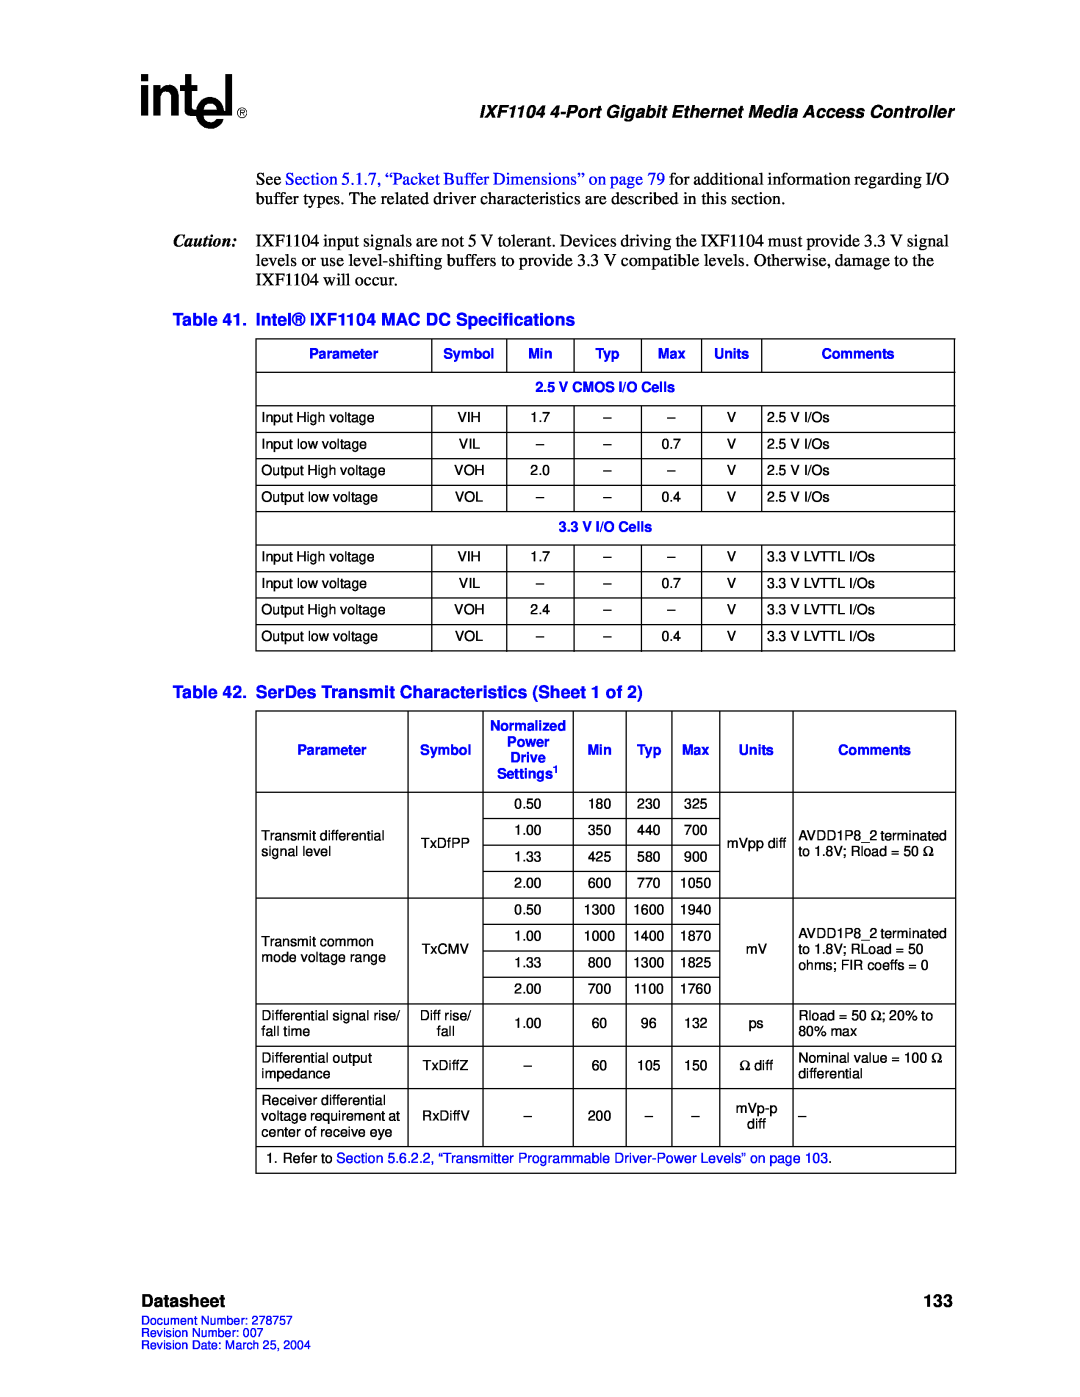 Intel manual Intel IXF1104 MAC DC Specifications, Datasheet 